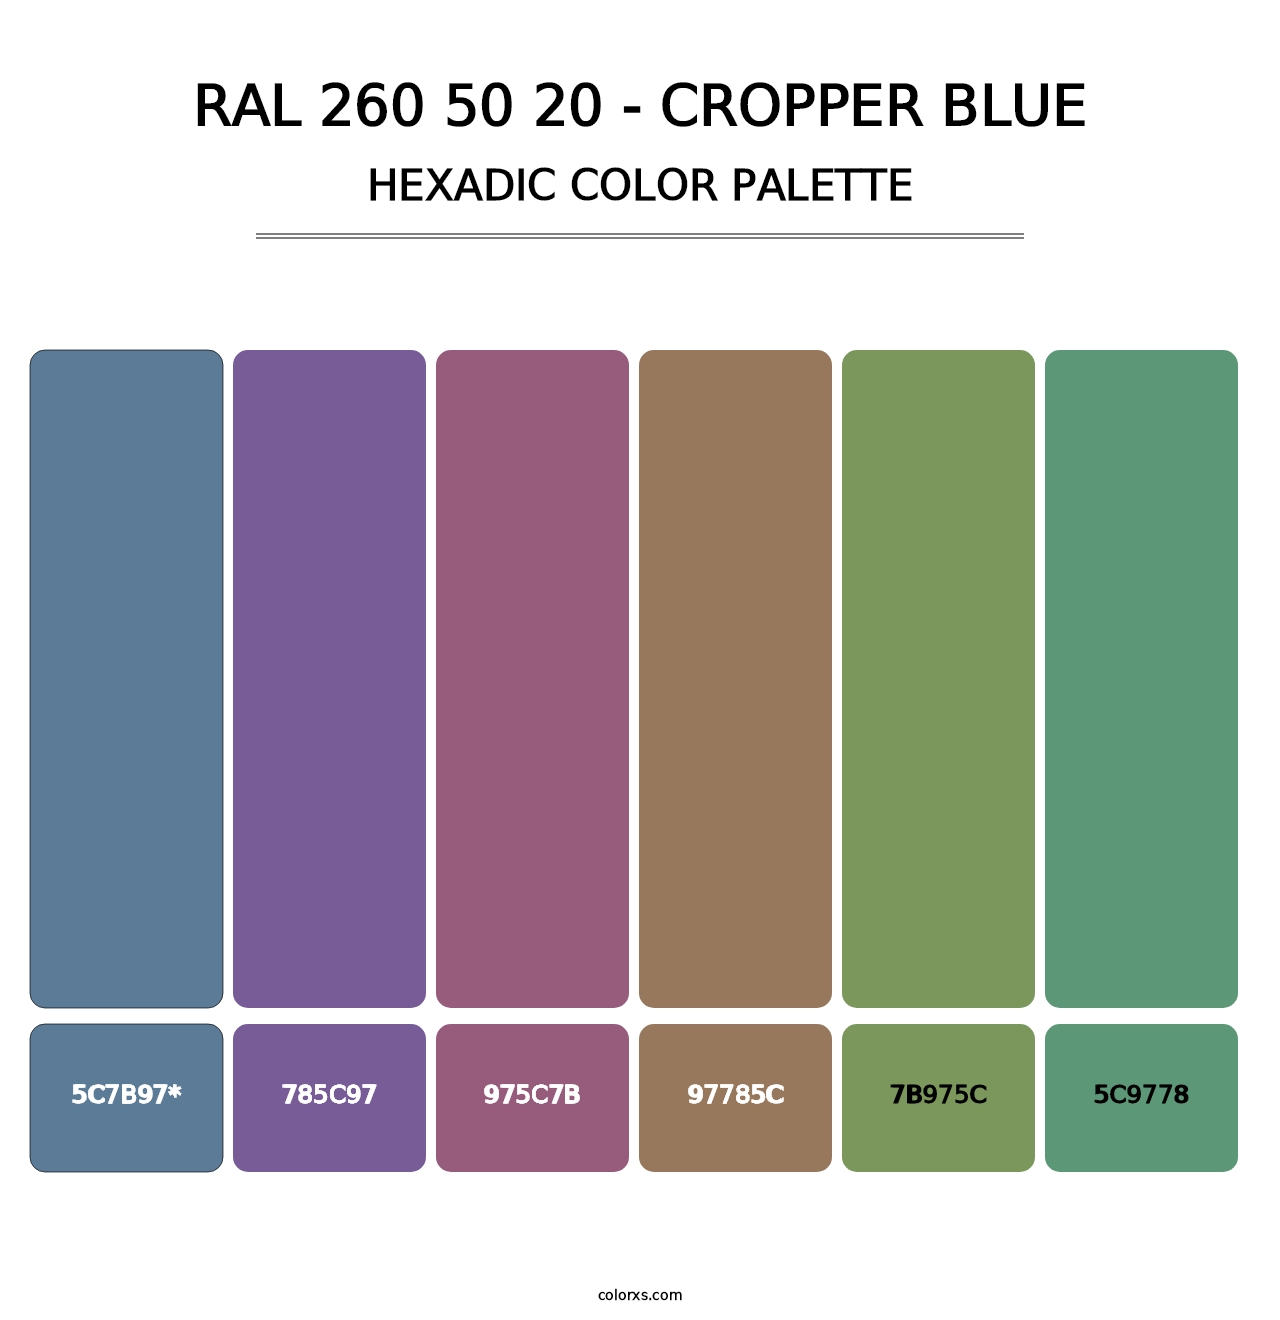 RAL 260 50 20 - Cropper Blue - Hexadic Color Palette